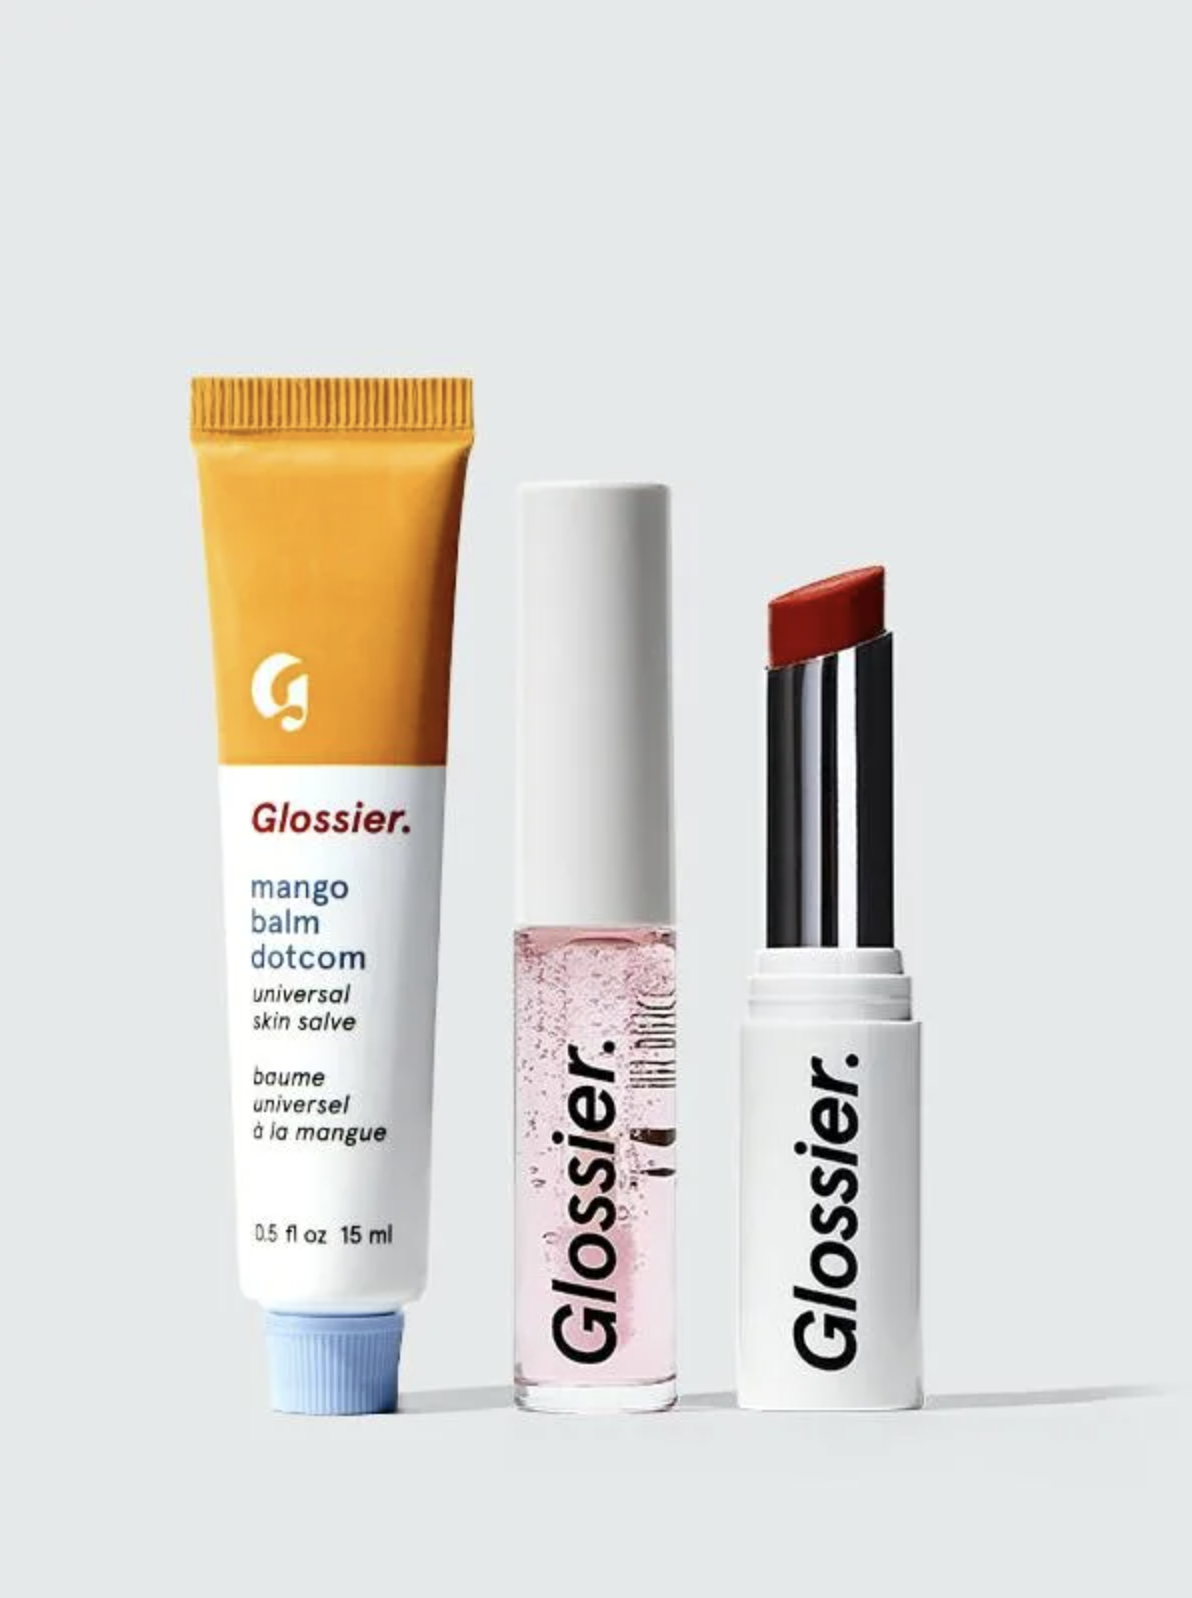 The squeezable Balm Dotcom tube, Lip Gloss applicator bottle, and retractable Generation G lipstick tube